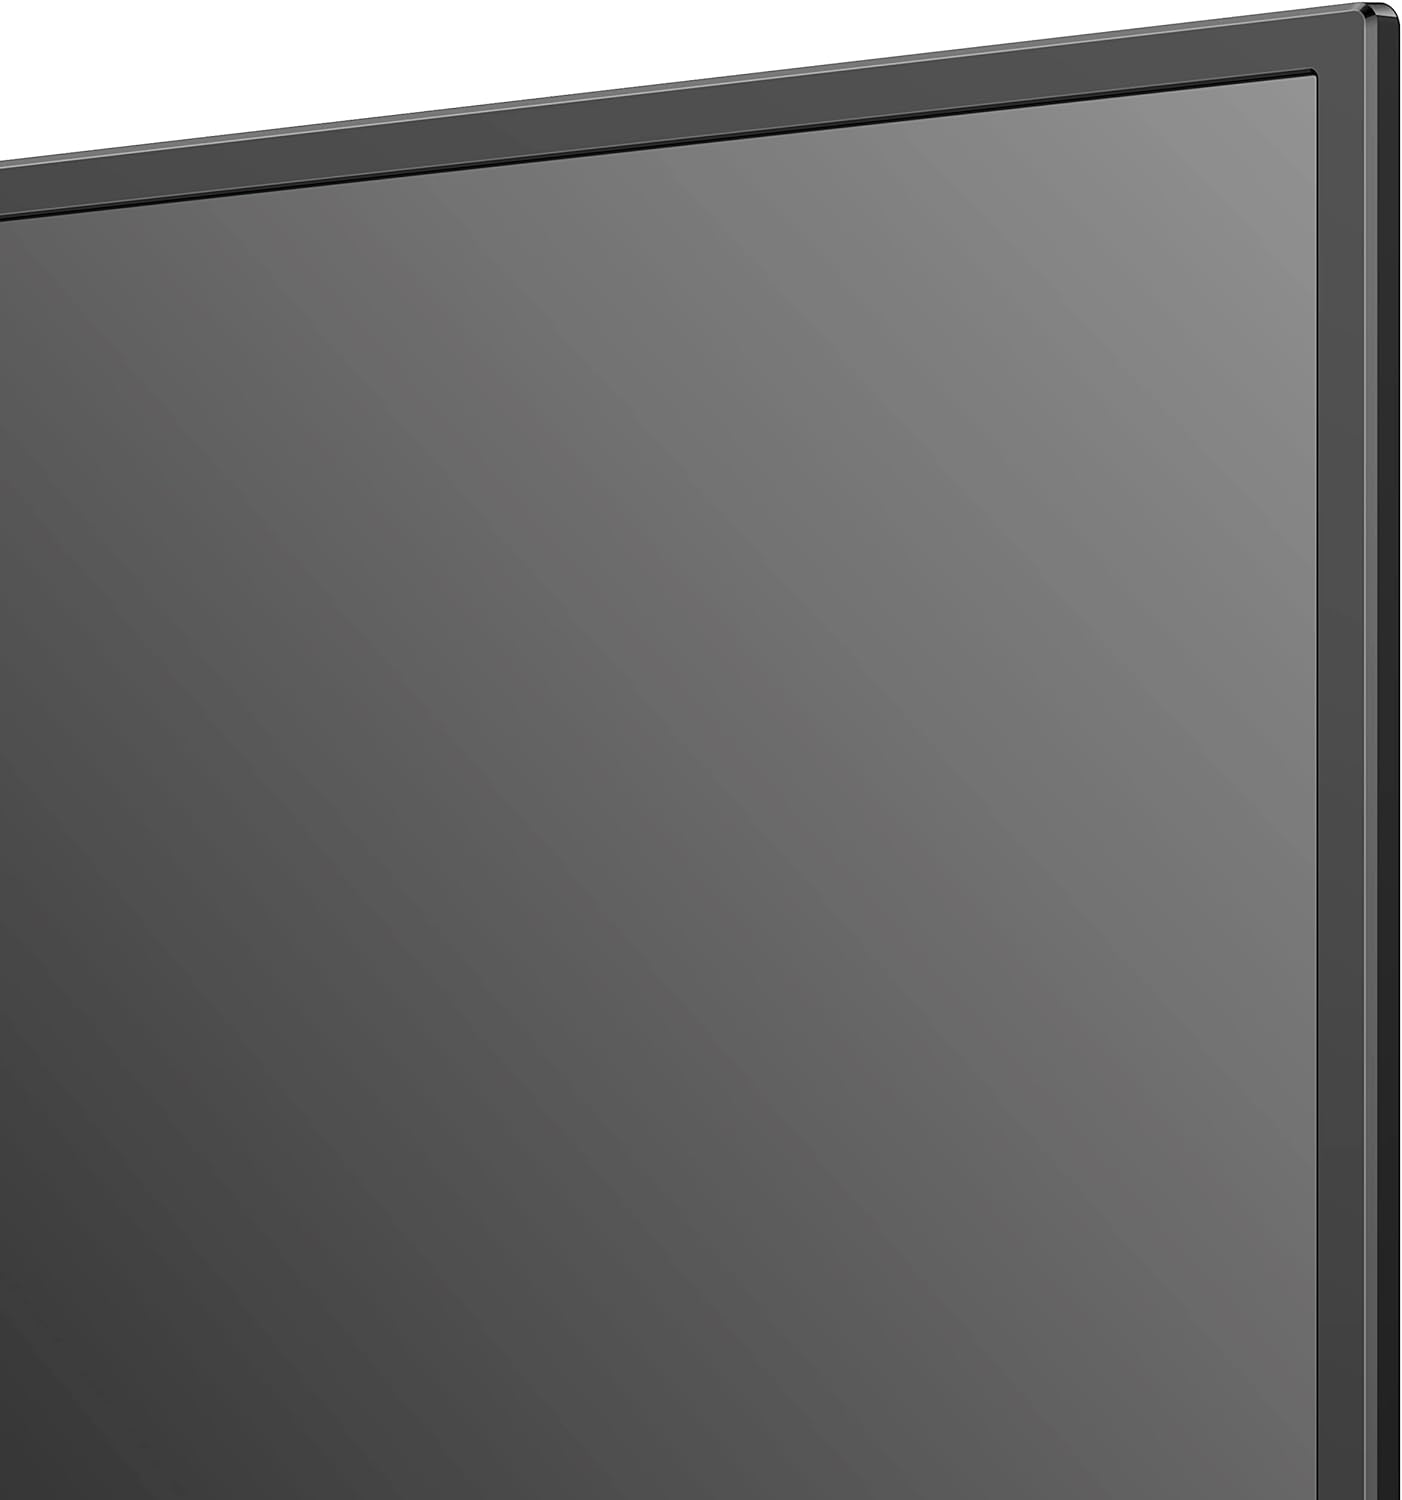 TCL 40" Class 3-Series Full HD 1080p LED Smart Roku TV - 40S355-CA (Refurbished - 90 Days Warranty)